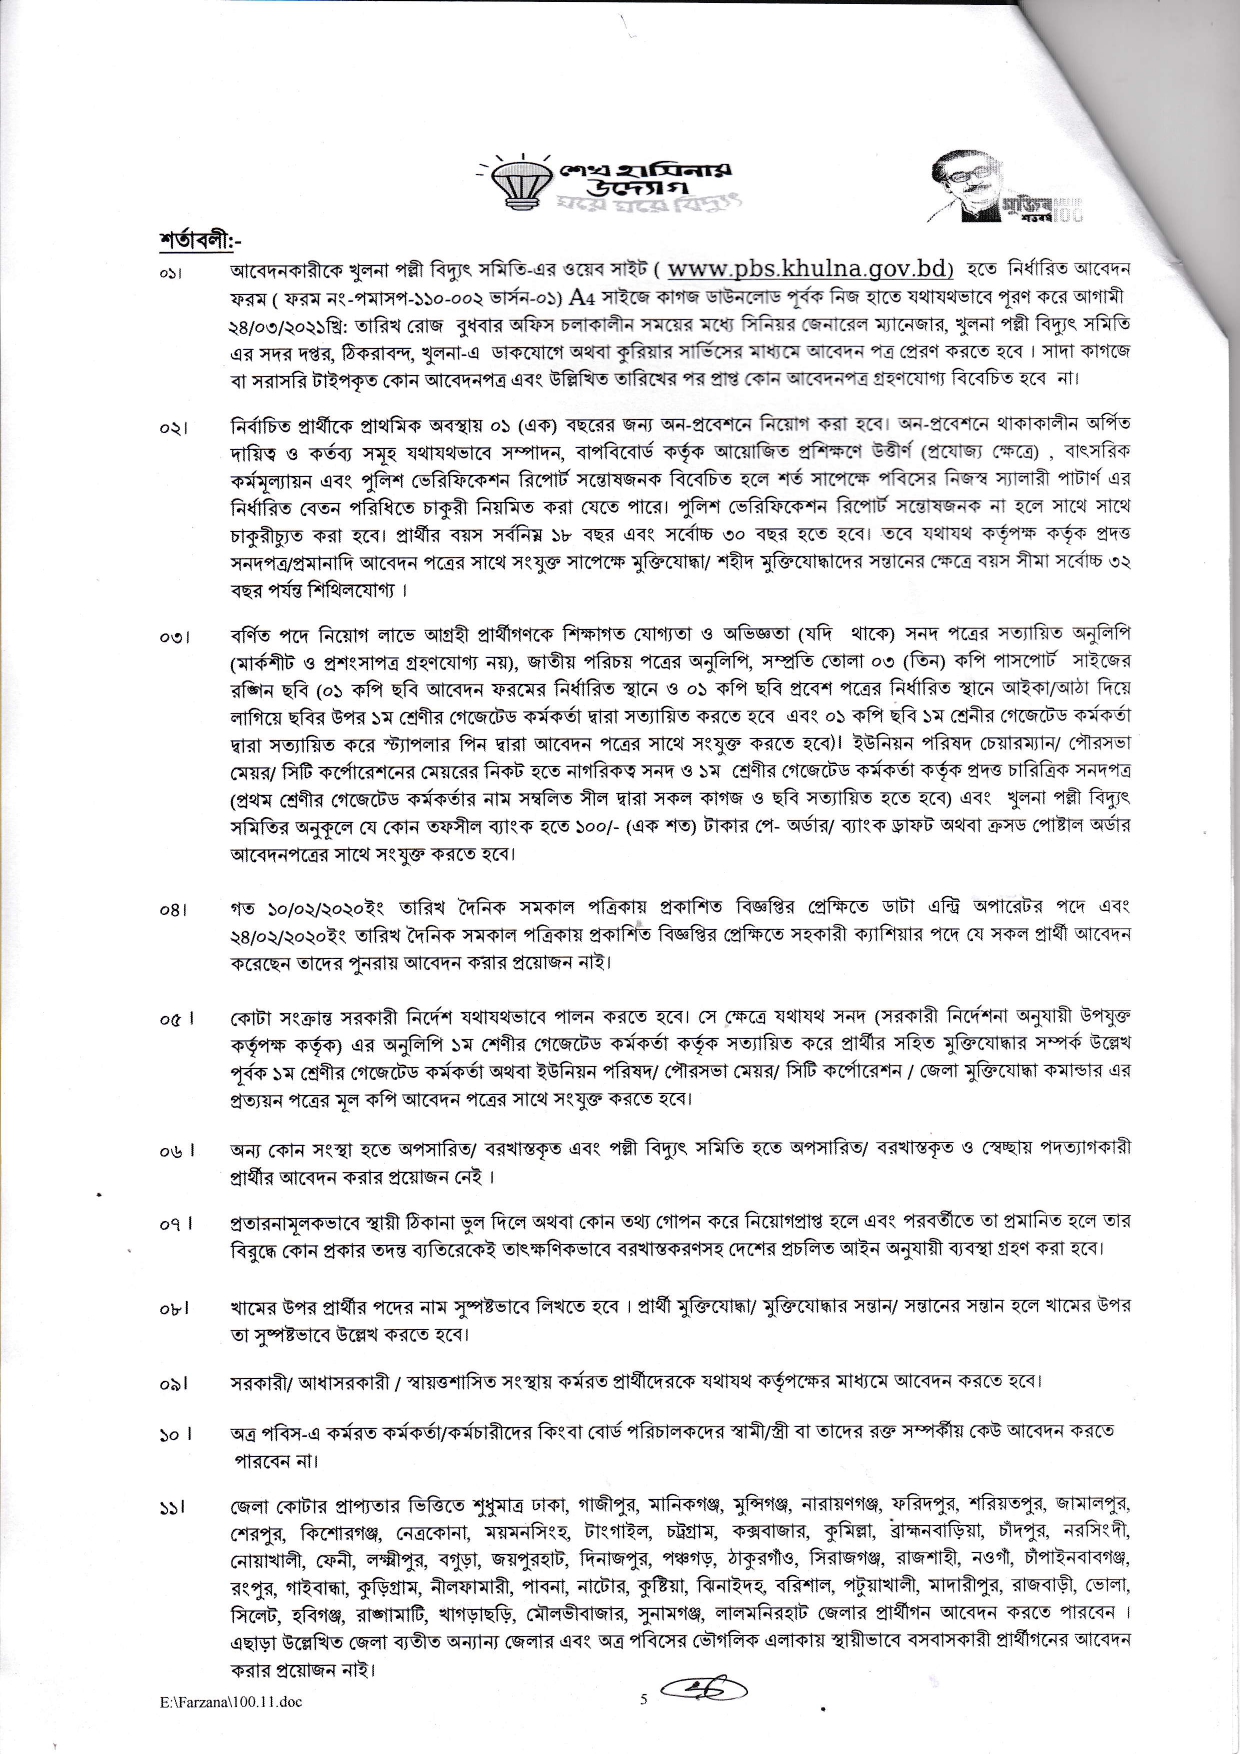 Palli Bidyut Job Circular 2021 - বাংলাদেশ পল্লী বিদ্যুৎ নিয়োগ ২০২১ - পল্লী বিদ্যুৎ নিয়োগ বিজ্ঞপ্তি 2021